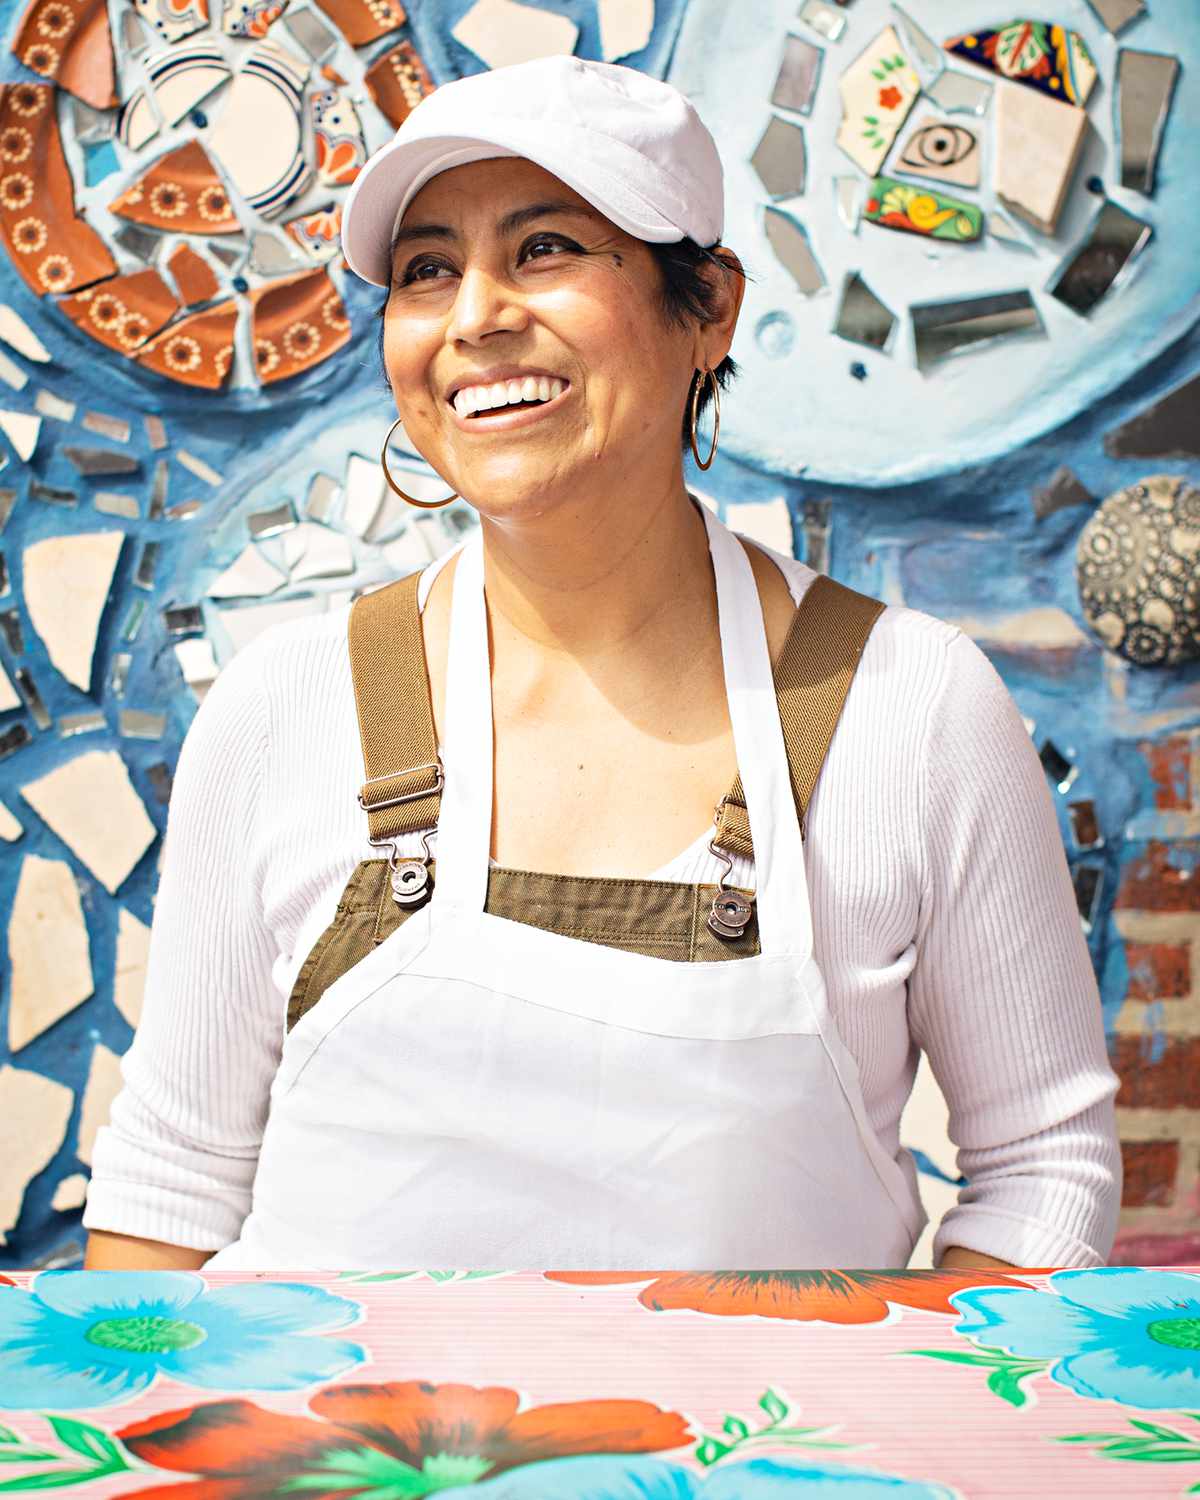 Chef Cristina Martínez of South Philly Barbacoa